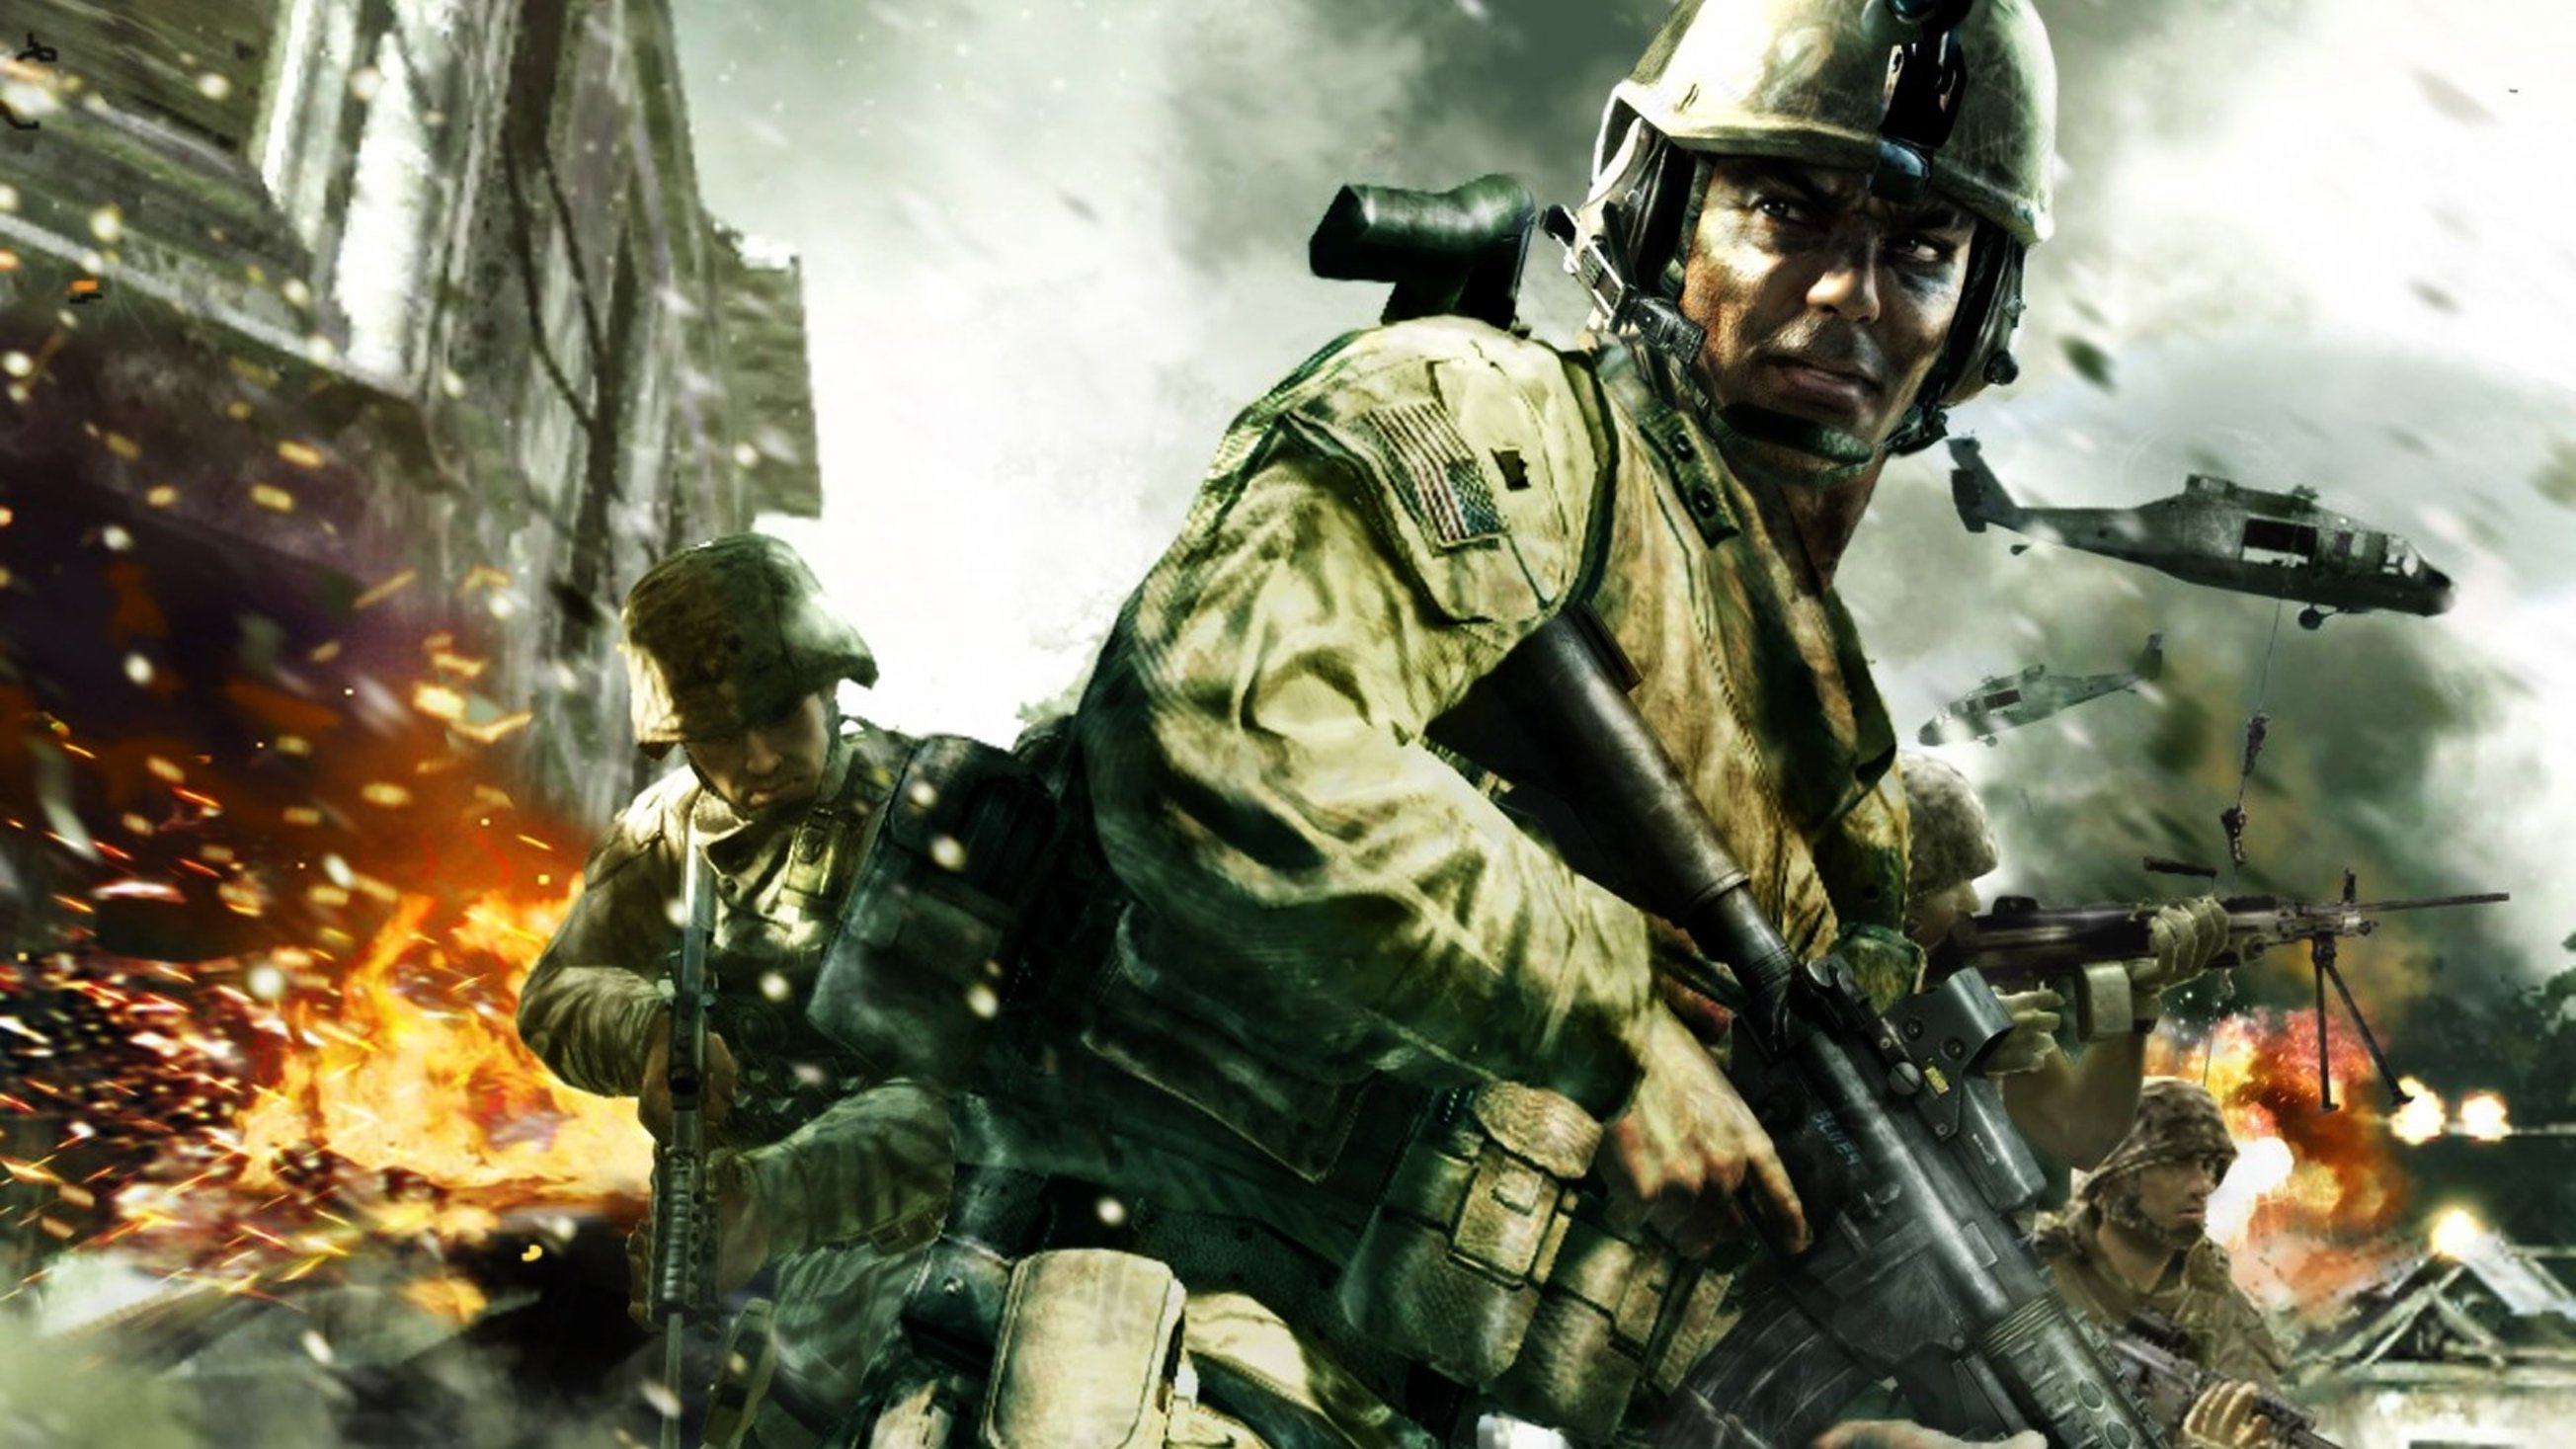 Call of duty adventure. Call of Duty 4 Modern Warfare. СФД ща вген ьщвук цфкафку 4. Call of Duty - часть 4 - Modern Warfare. Кал оф дьюти Modern Warfare.